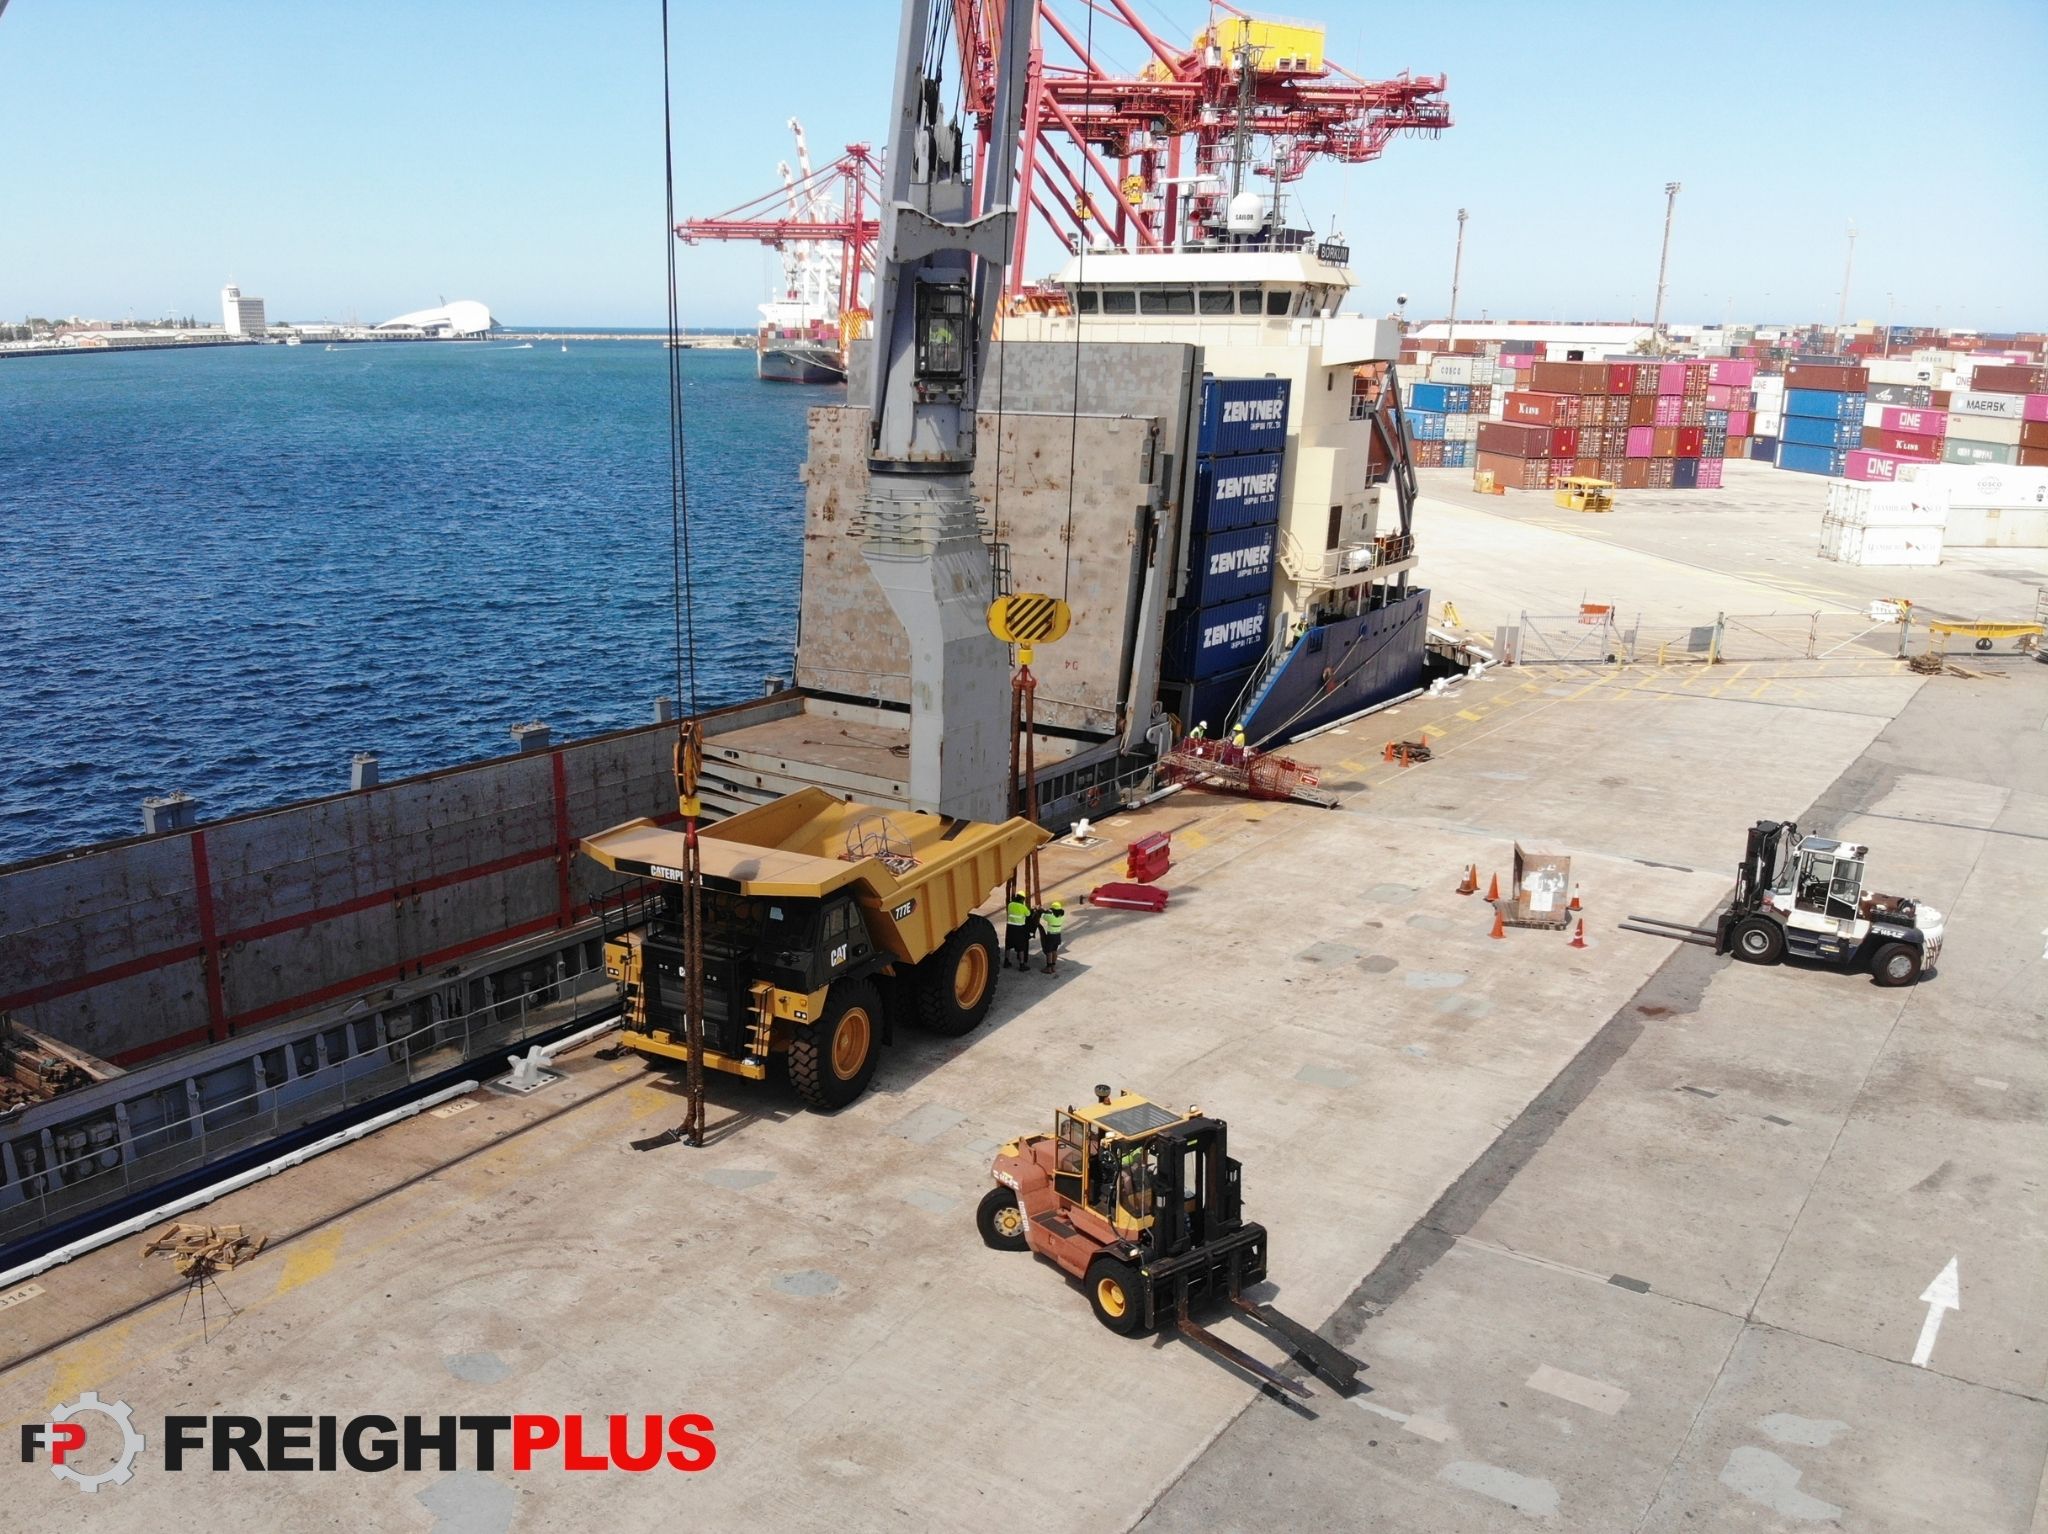 A Yellow Caterpillar Dump Trunk is being unloaded from a breakbulk vessel at a Port.